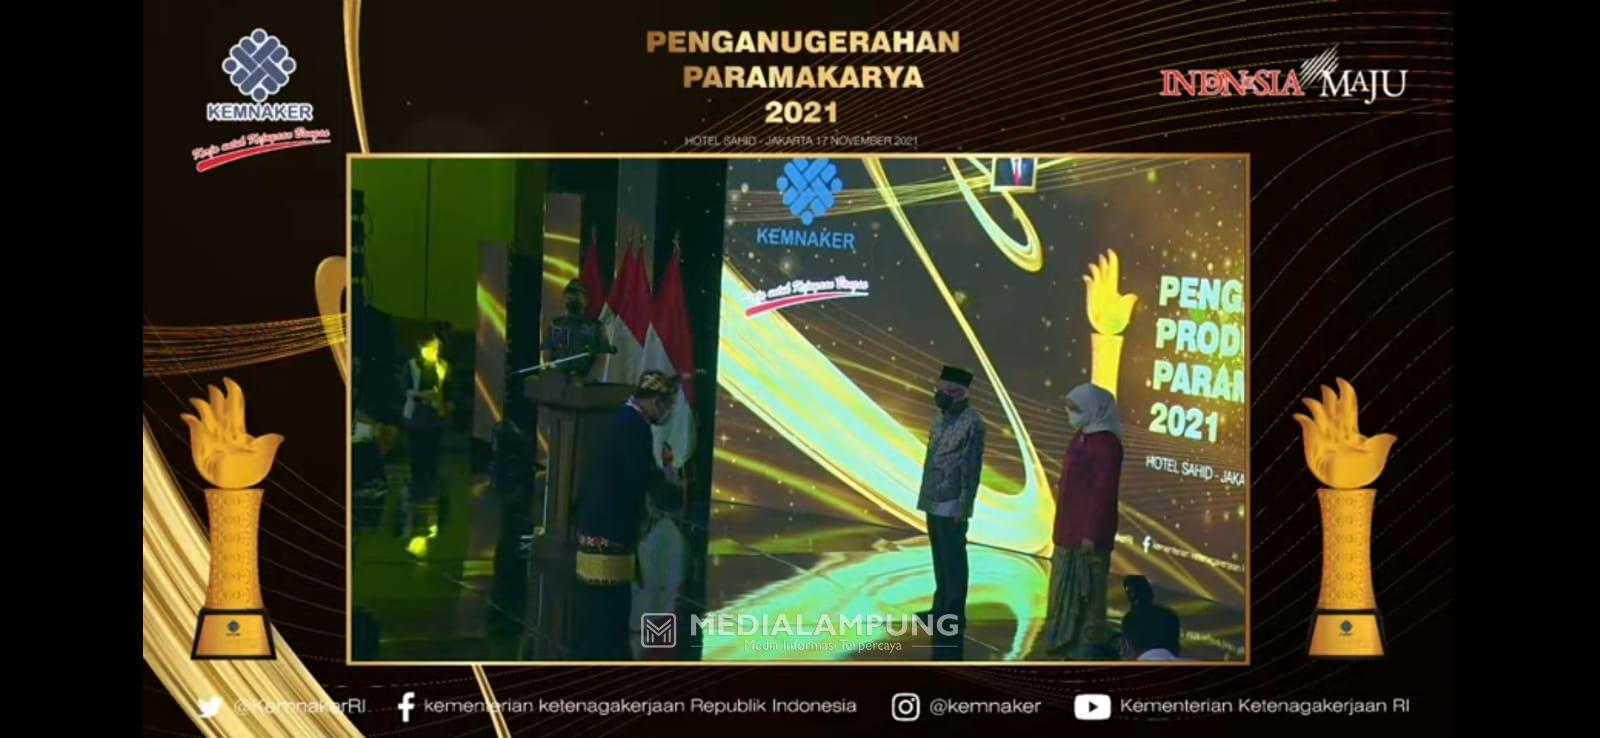 Bersama Gubernur Lampung, CV Ratu Luwak Raih Anugerah Produktivitas Paramakarya Tingkat Nasional